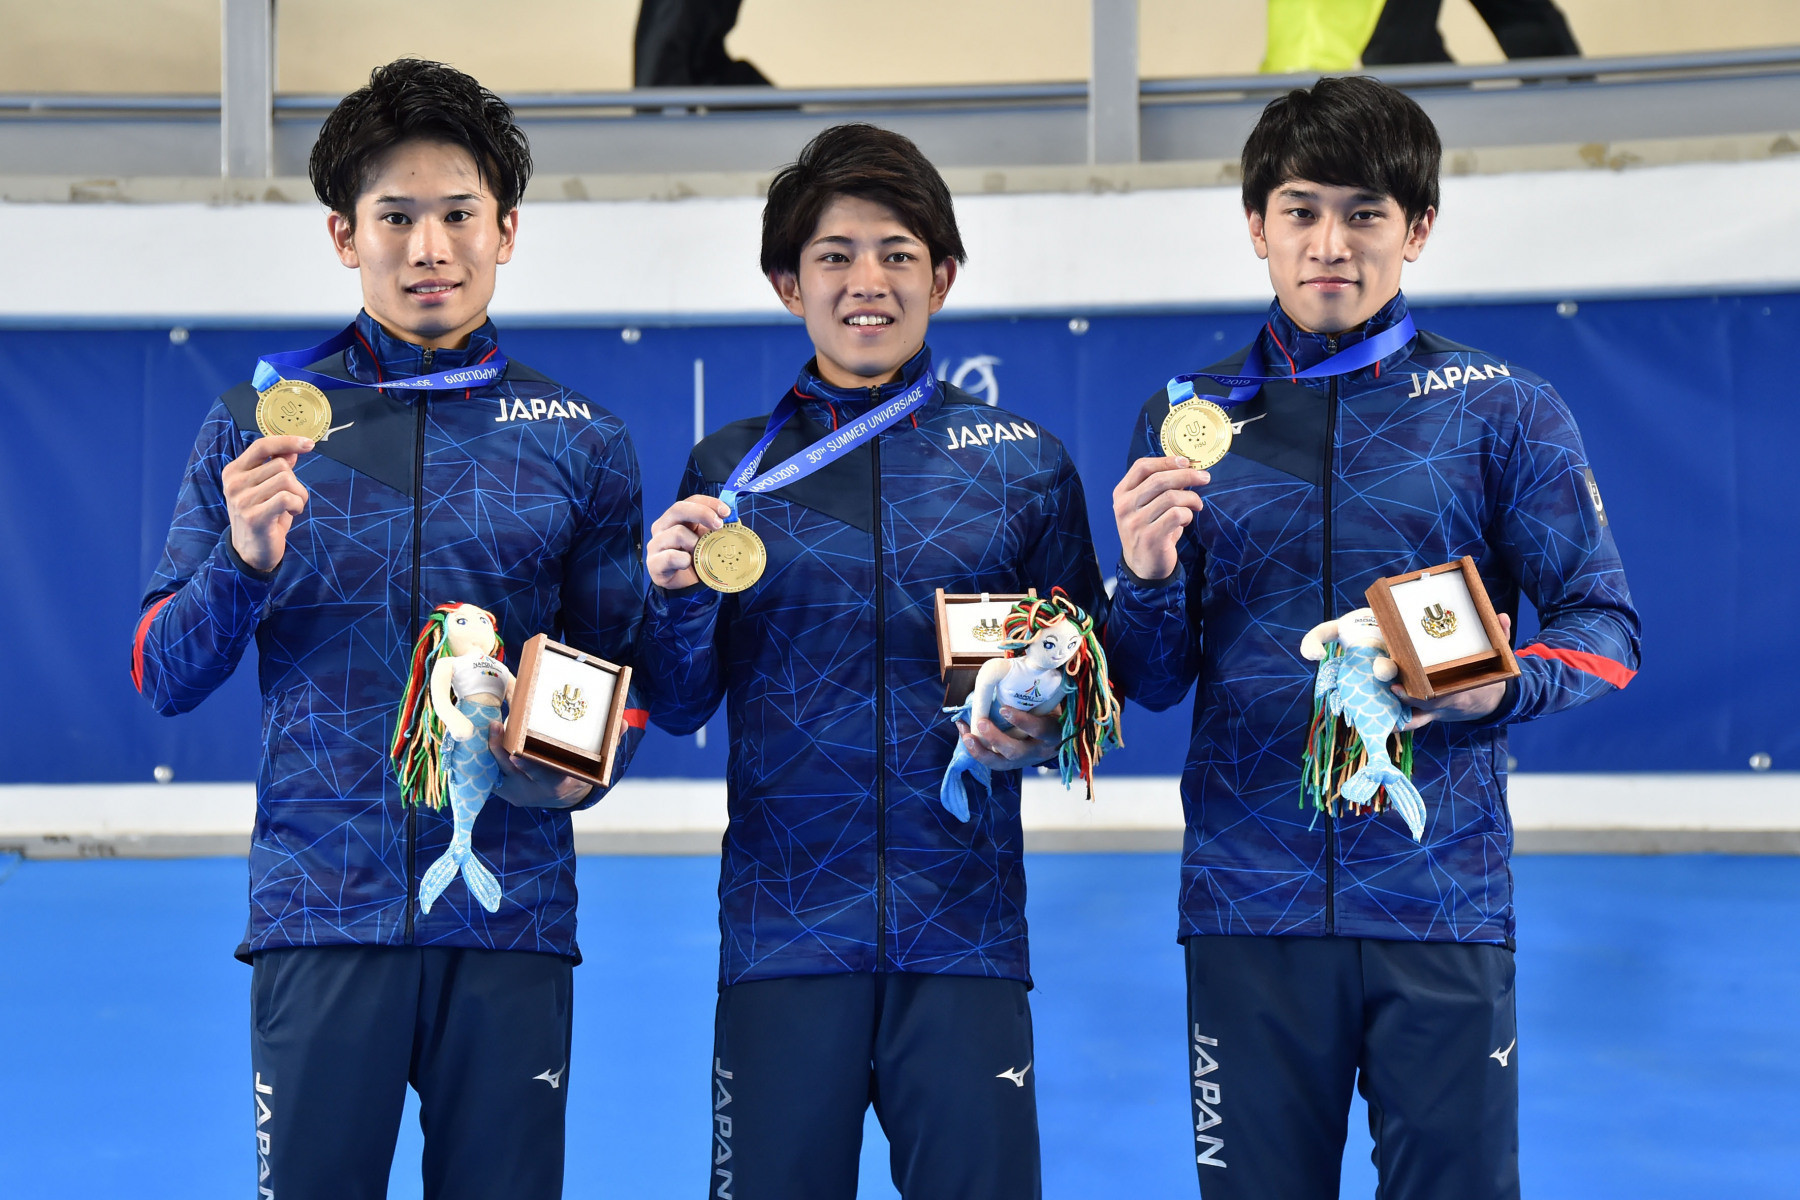 The Japanese trio of Kazuma Kaya and brothers Kakeru and Wataru Tanigawa were the triumphant team ©Naples 2019